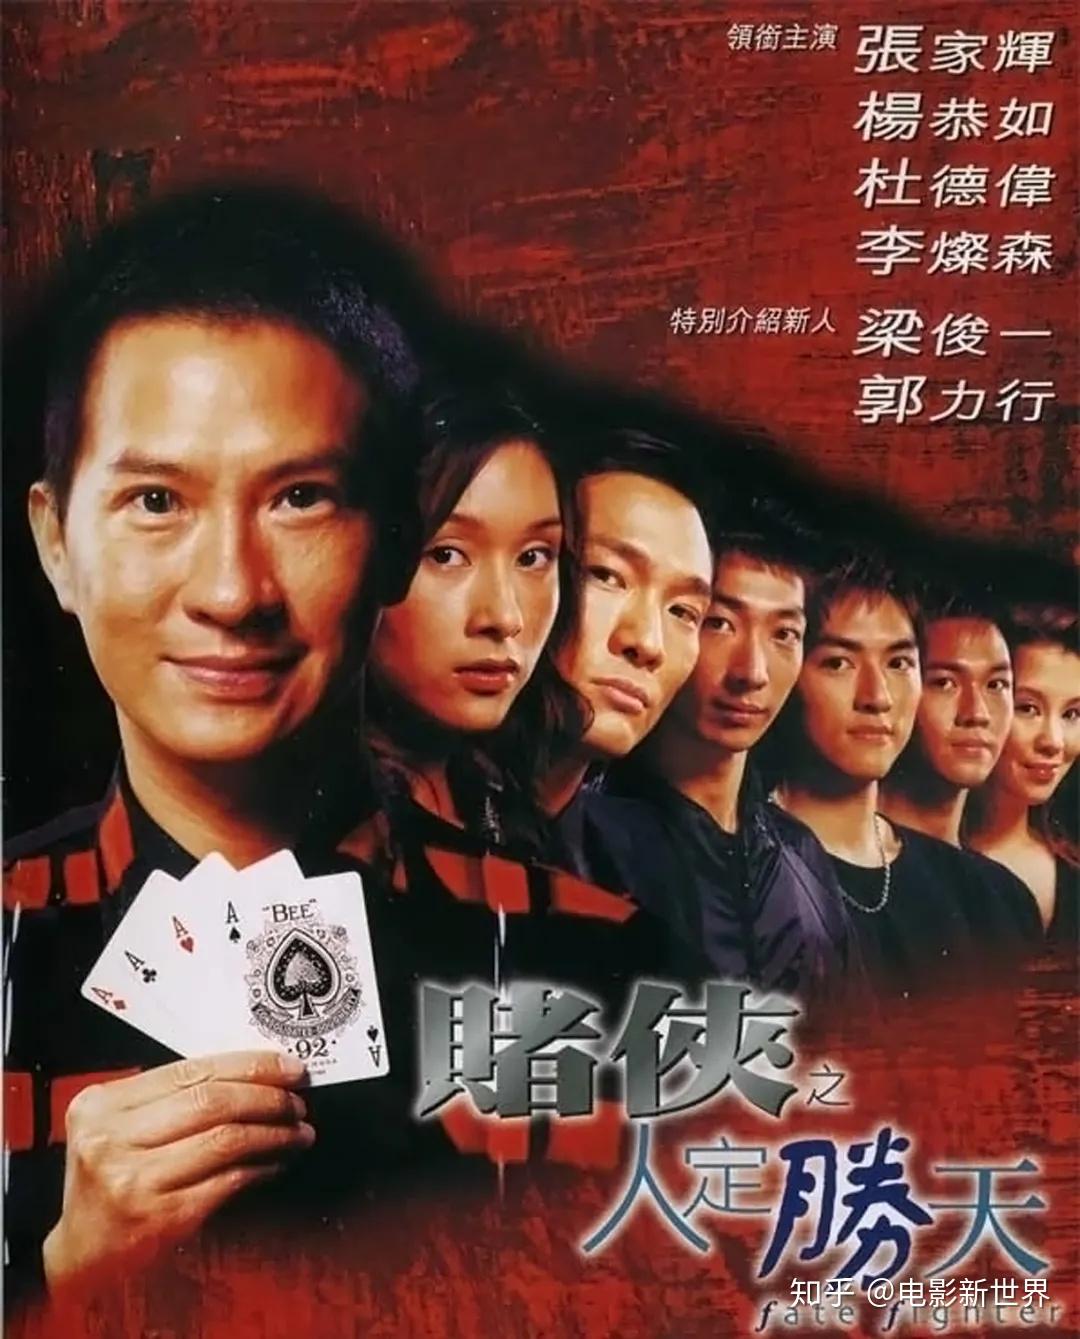 SHELL GAME 千王之王 (TVB Drama DVD) - Poh Kim Video International